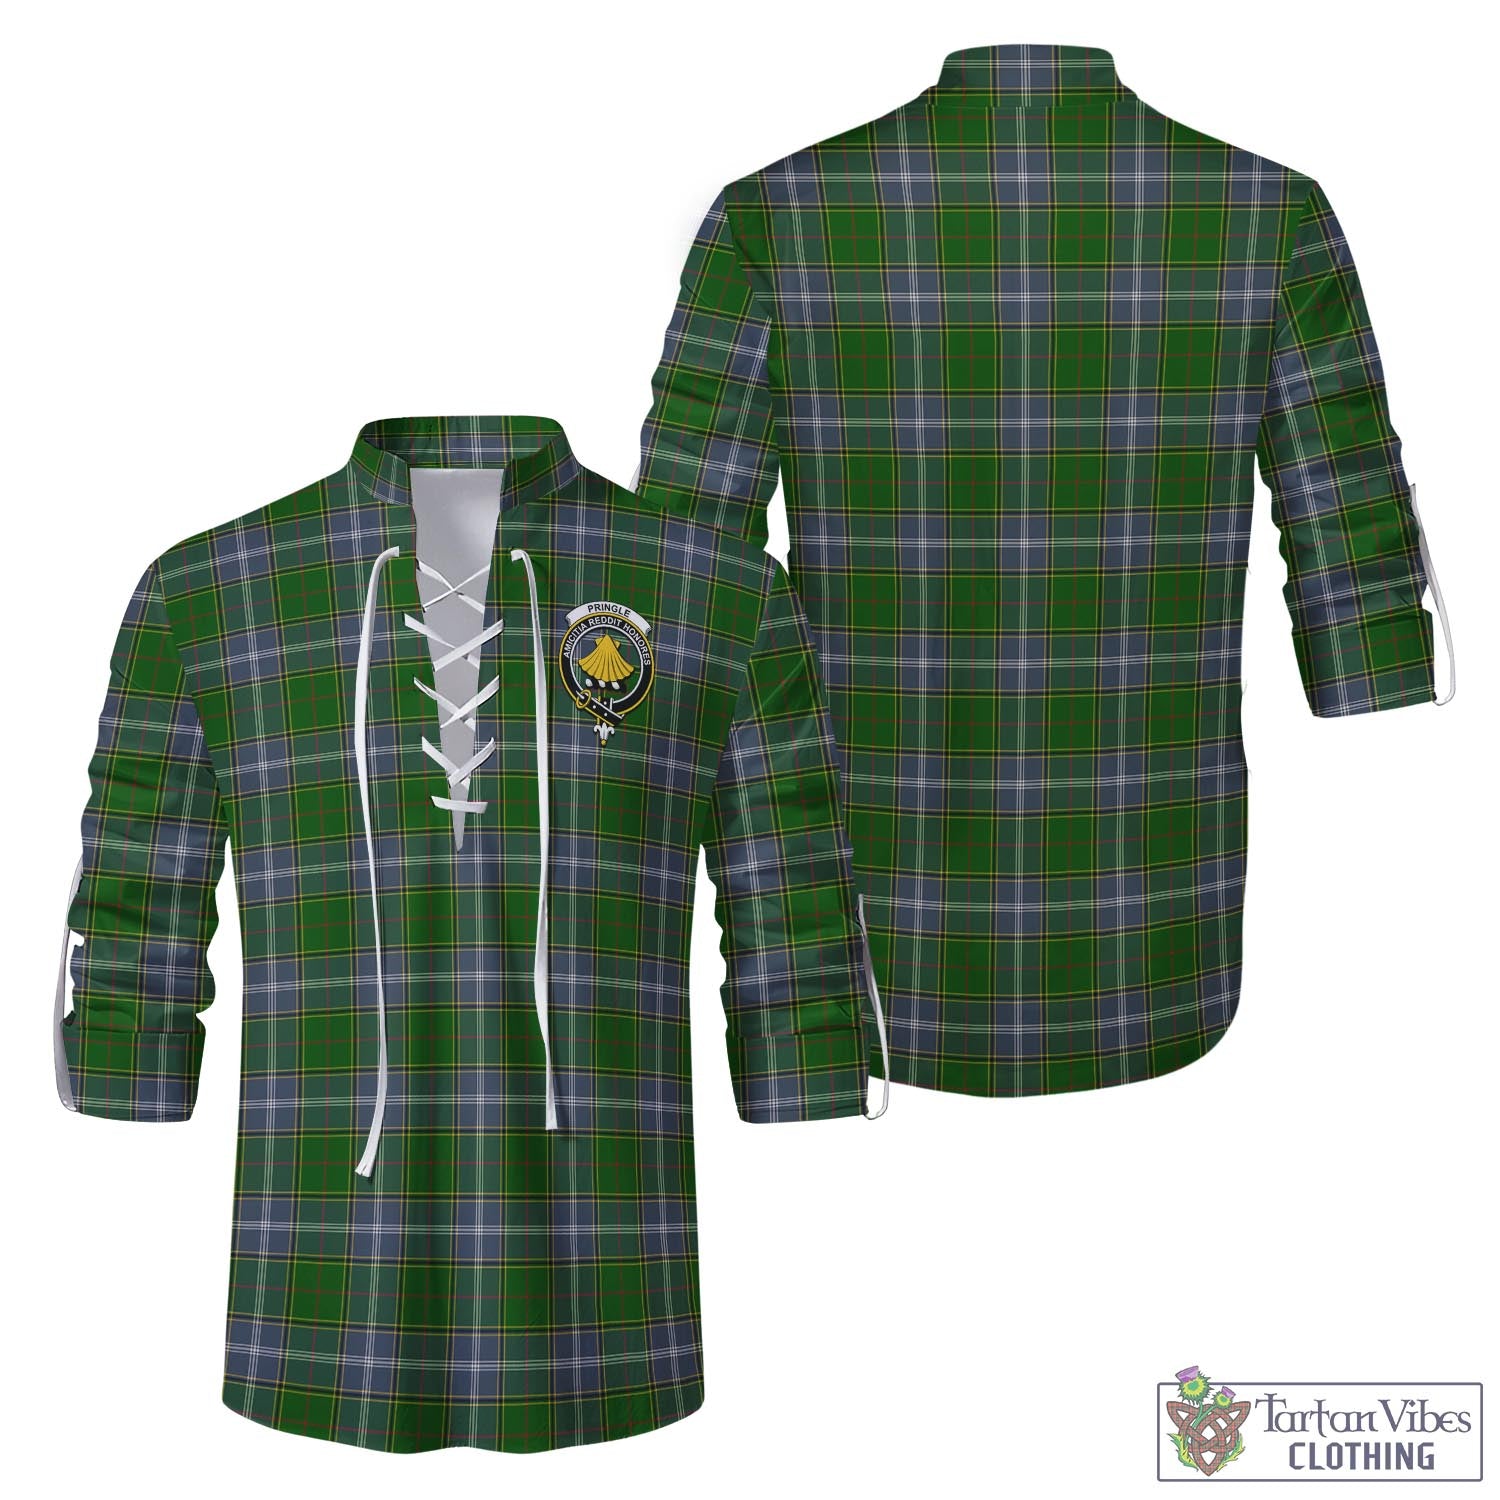 Tartan Vibes Clothing Pringle Tartan Men's Scottish Traditional Jacobite Ghillie Kilt Shirt with Family Crest